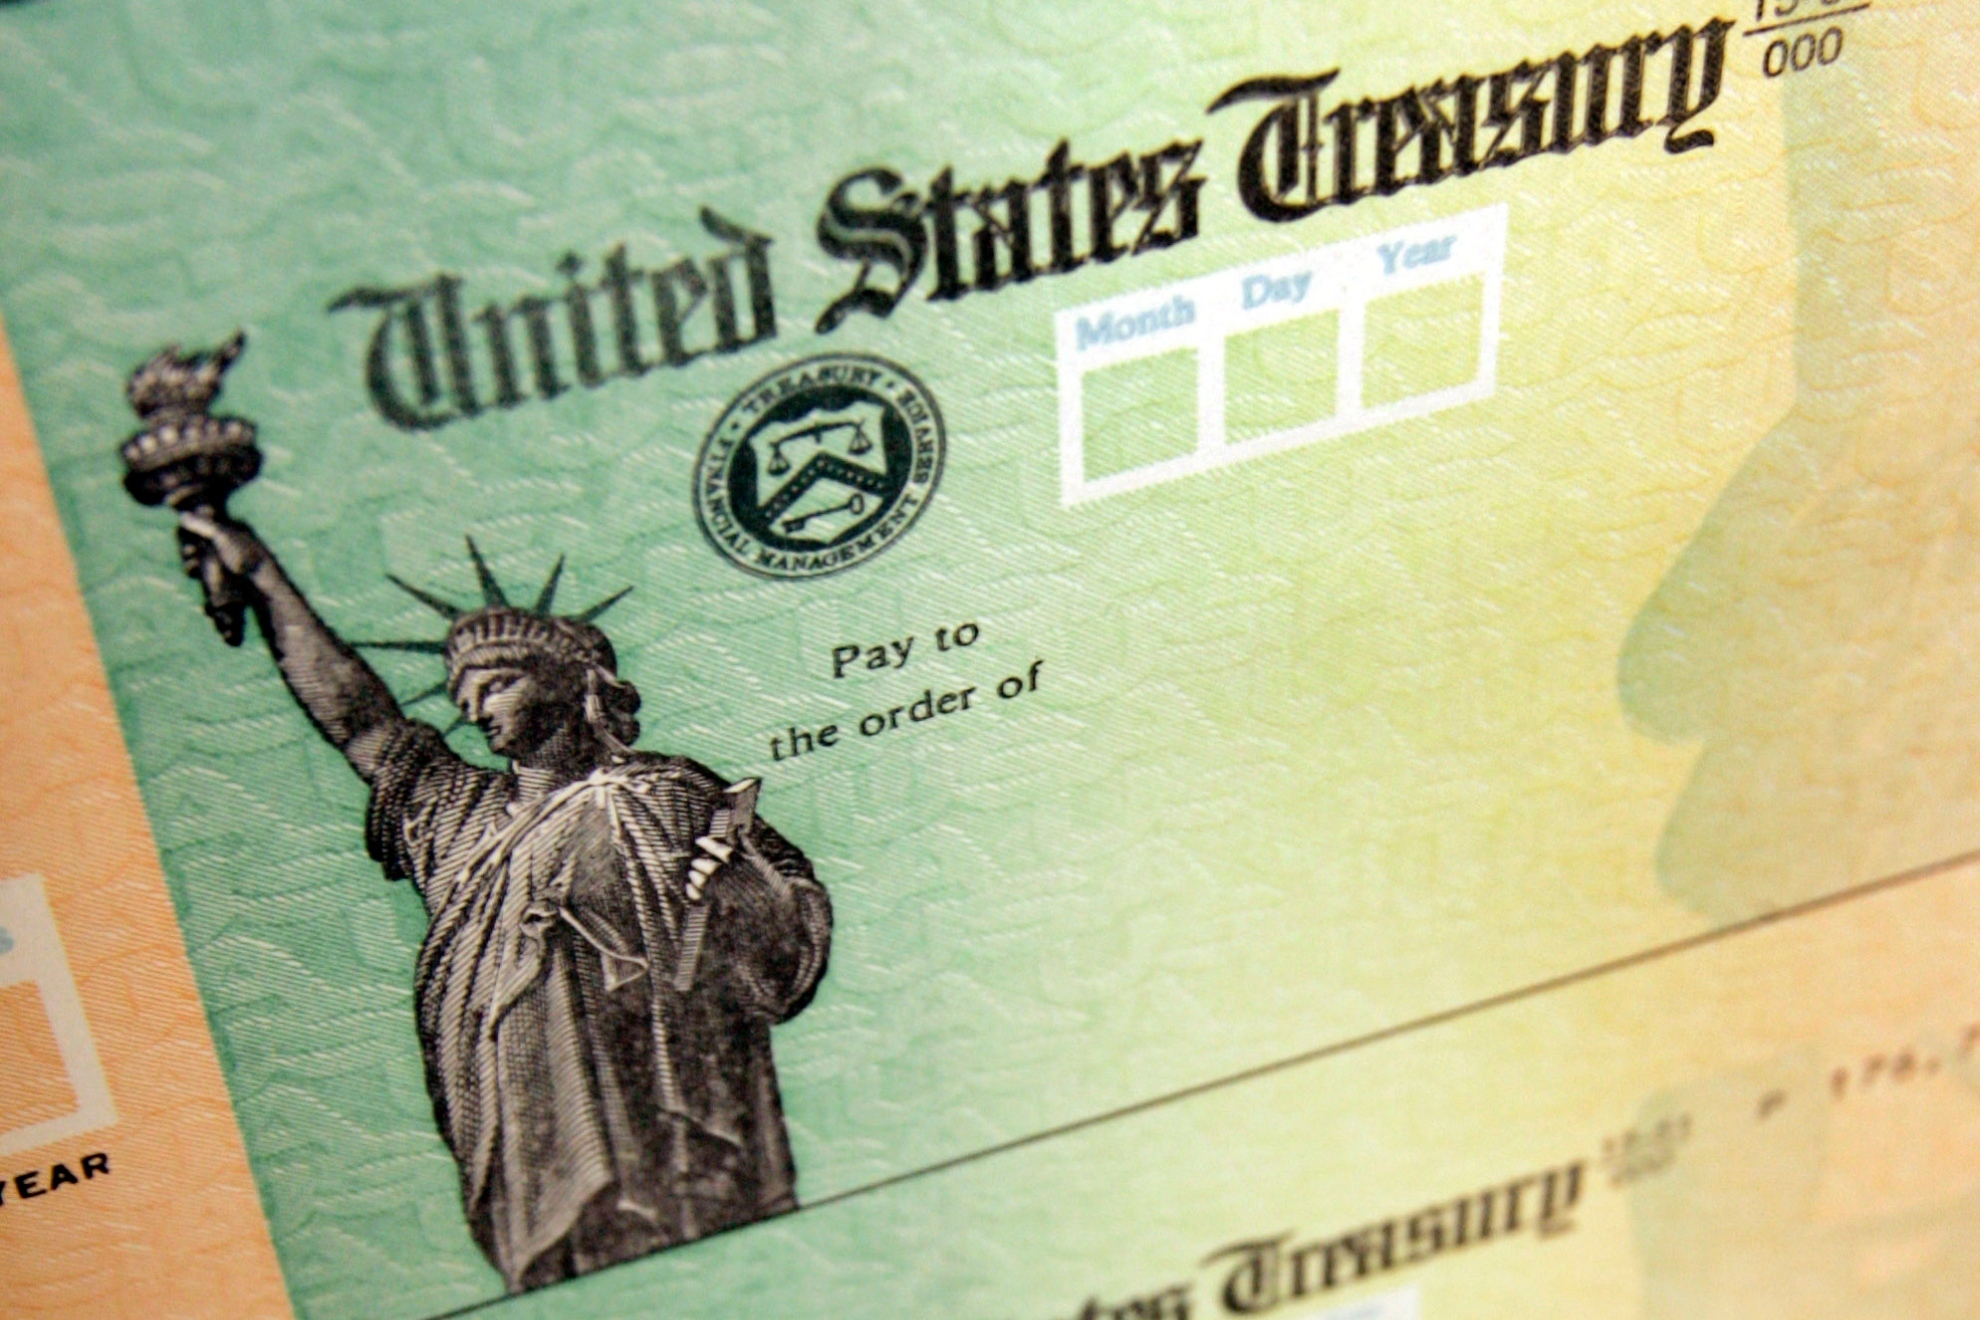 Image of a stimulus check